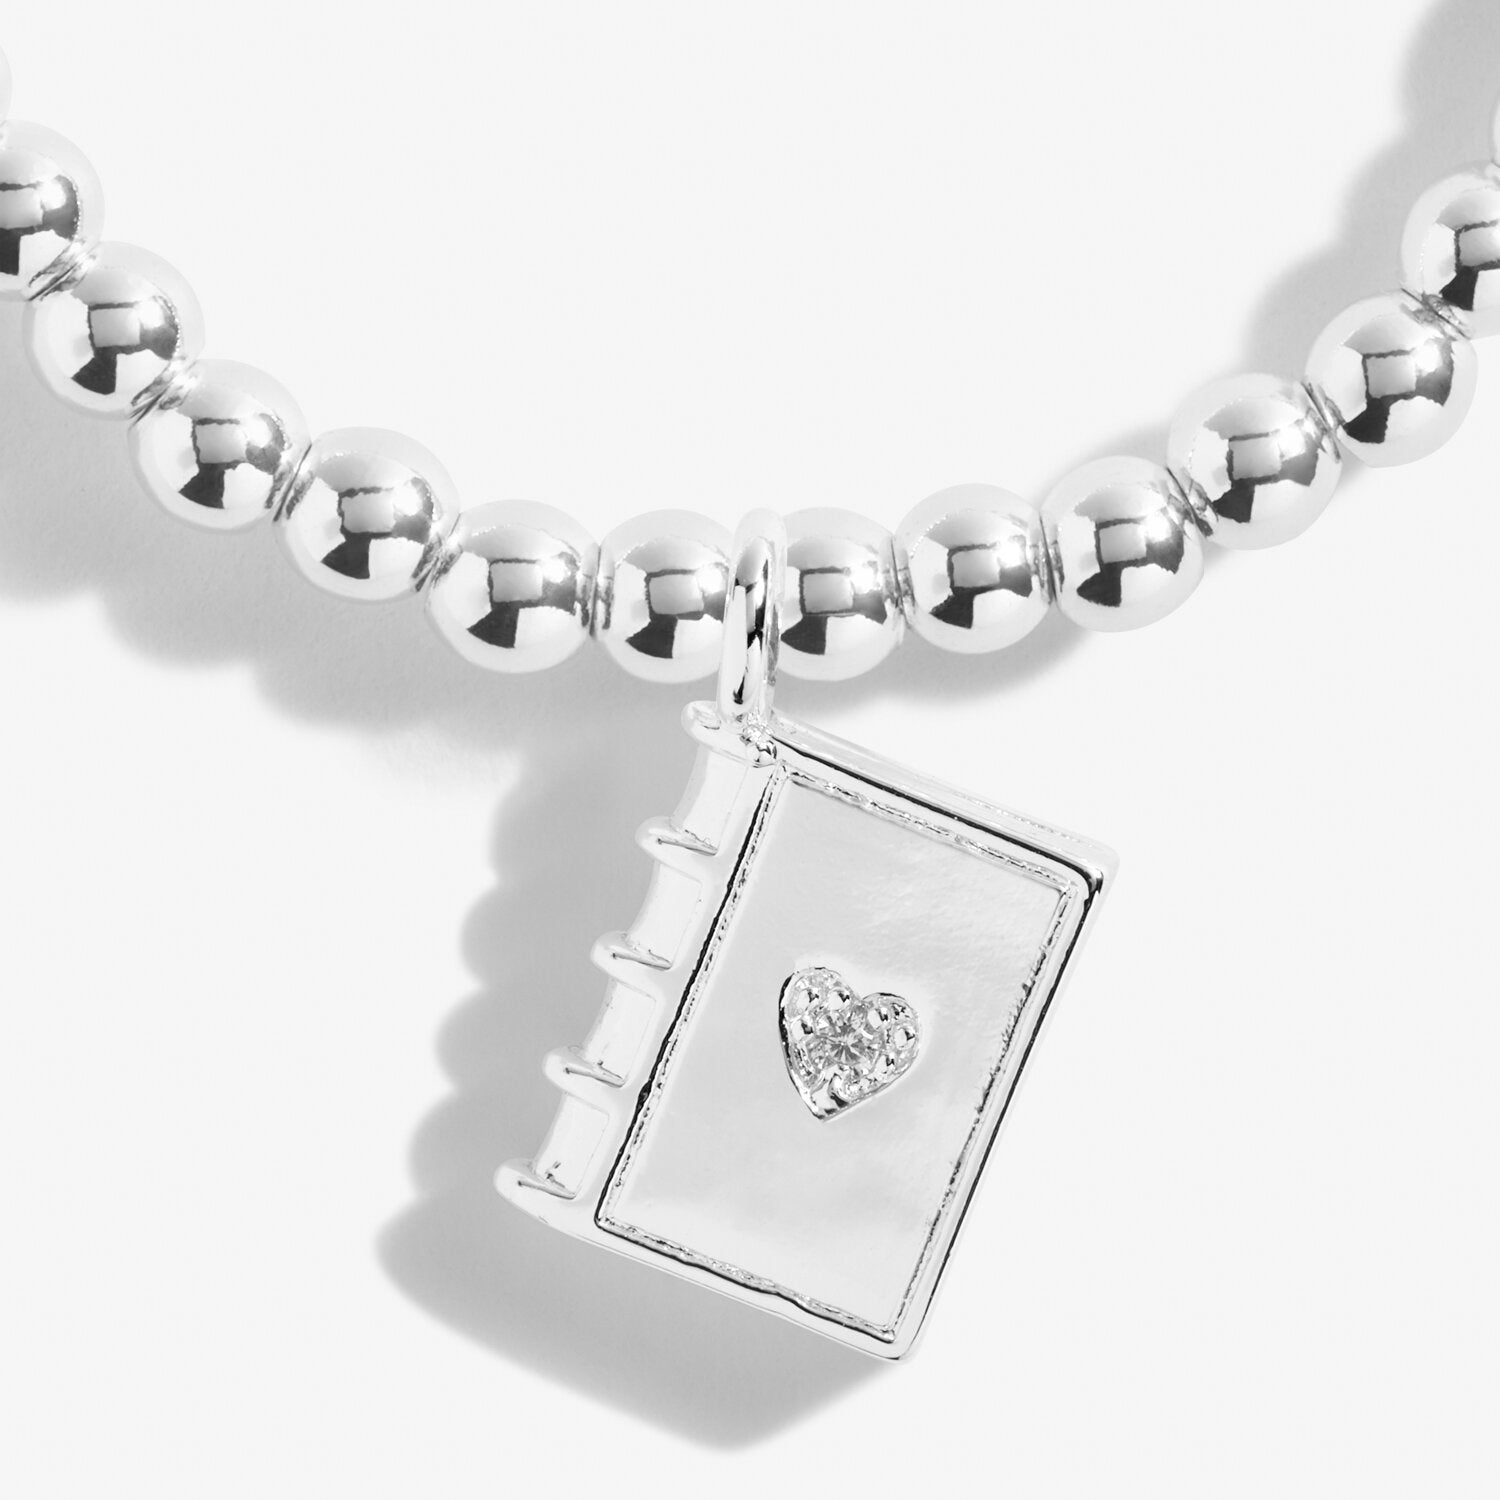 Joma Jewellery A Little 'New Chapter' Bracelet